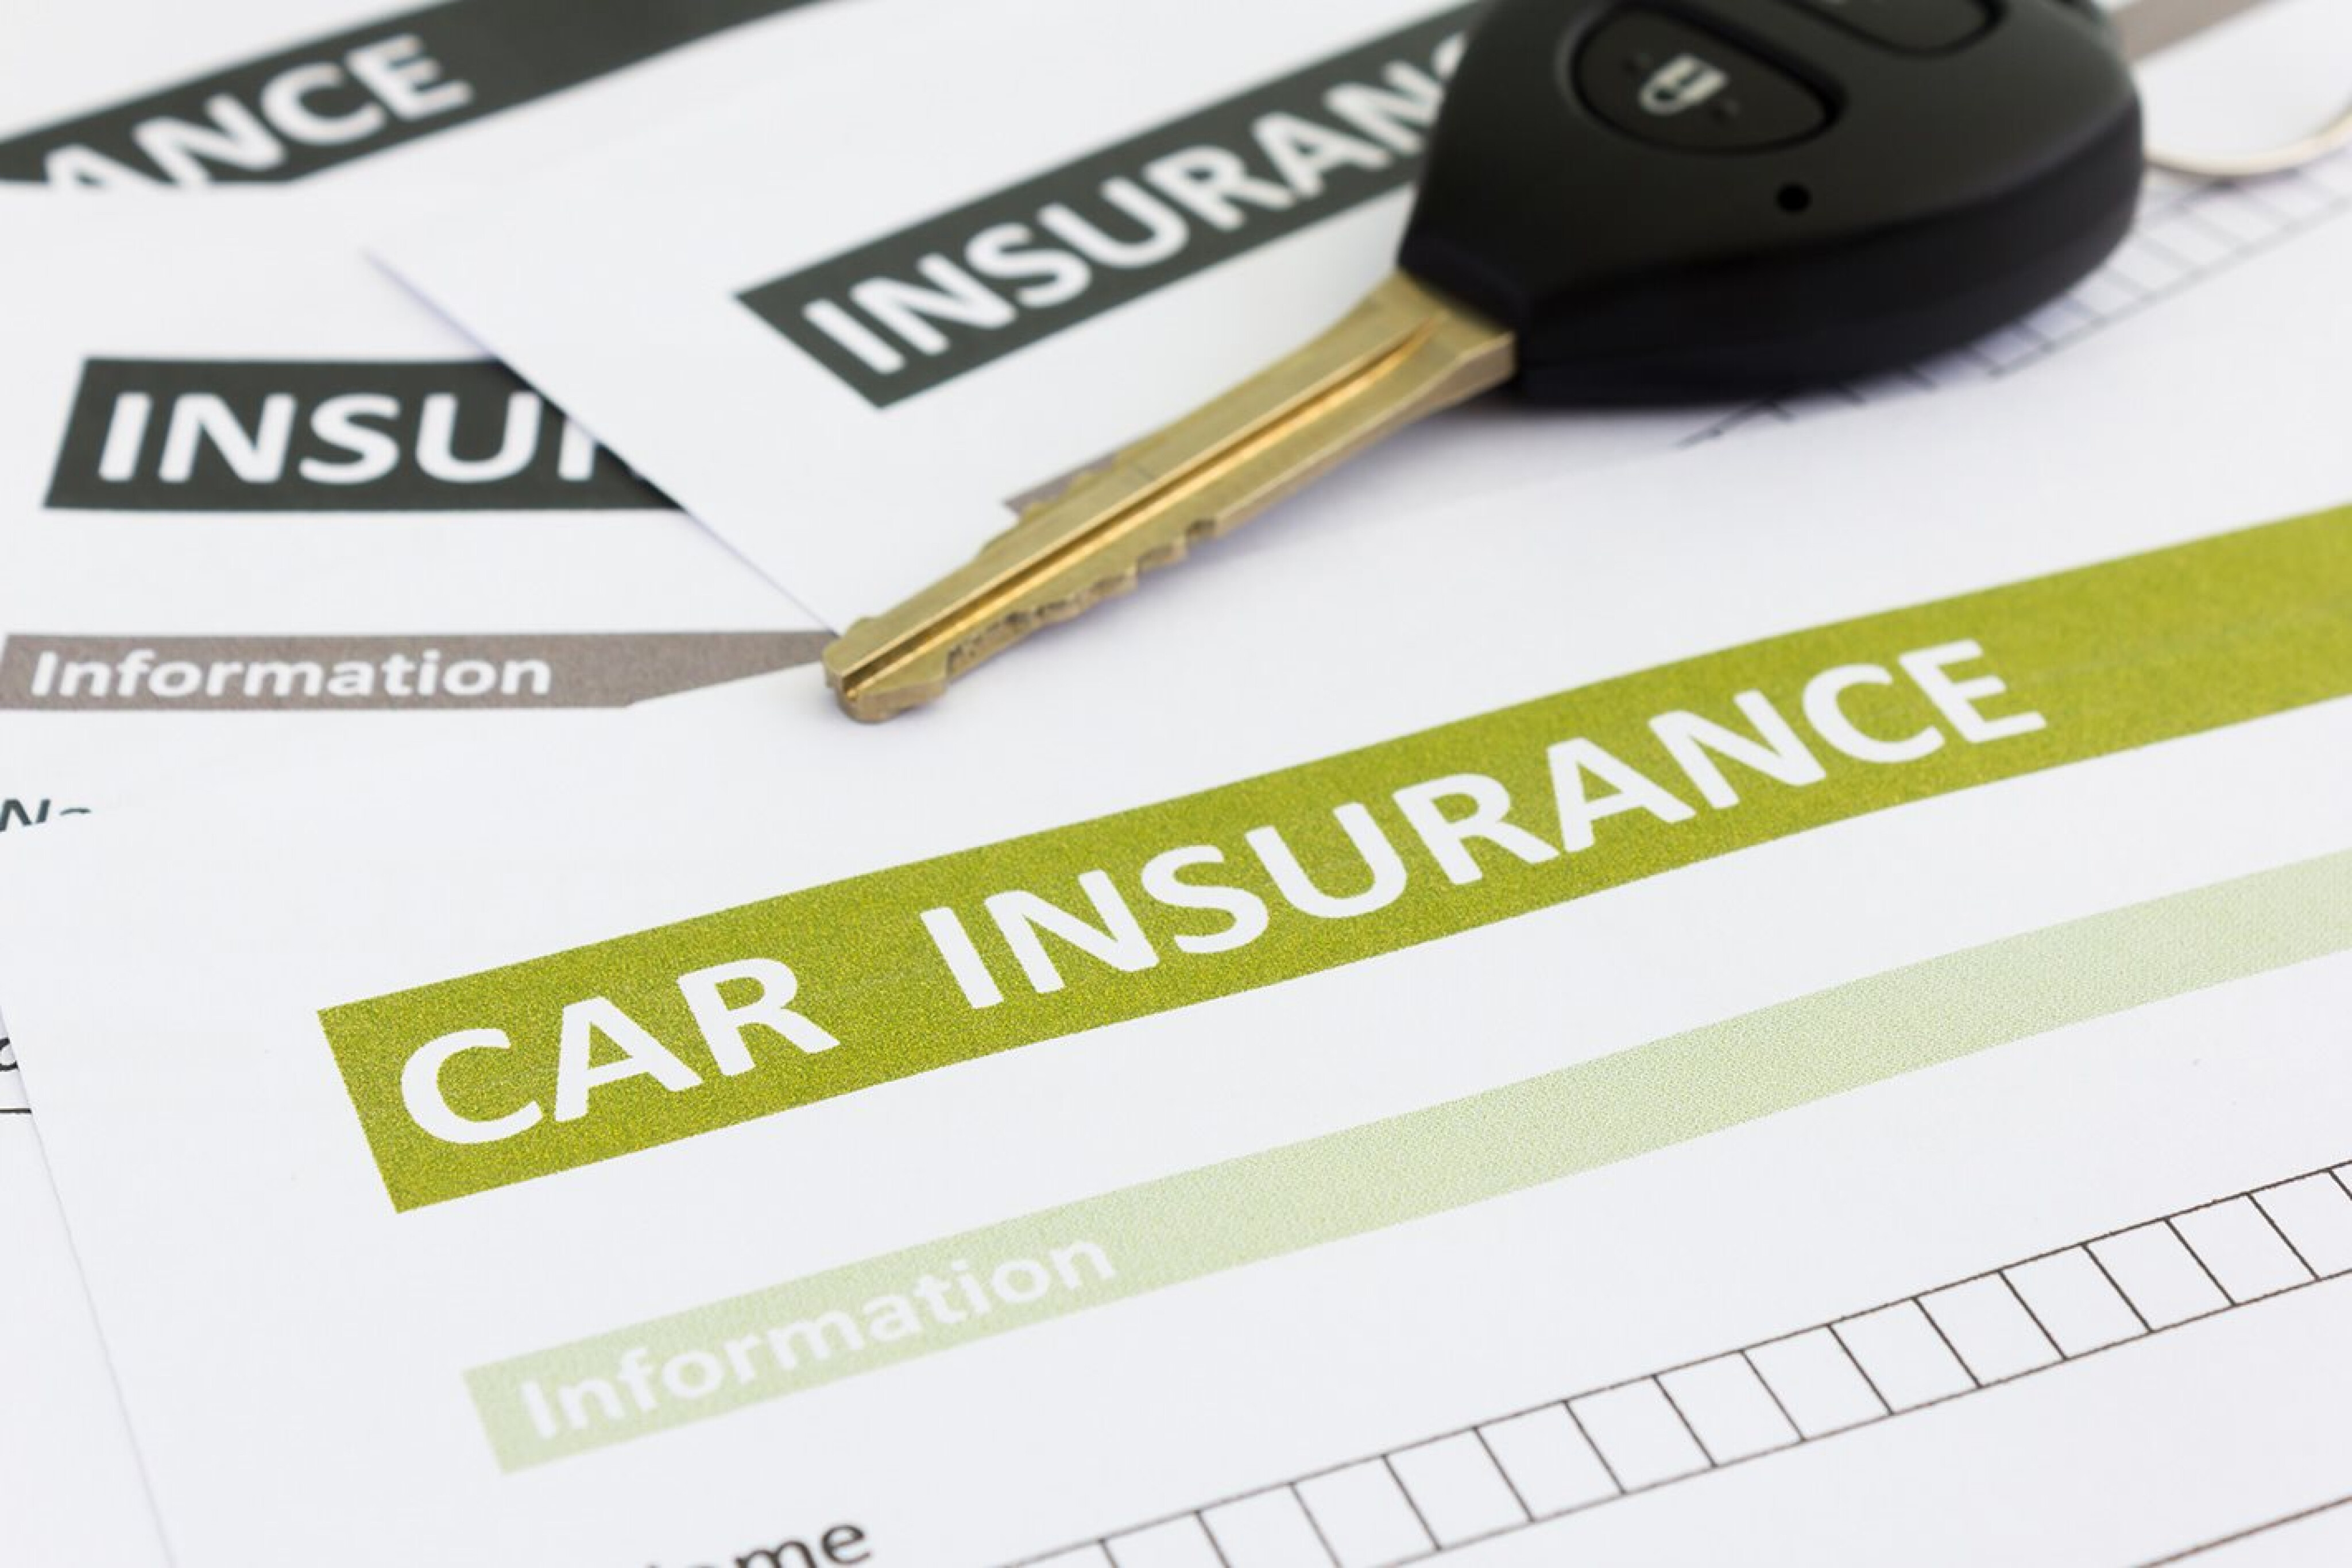 c76c0a20/car insurance documentation jpg